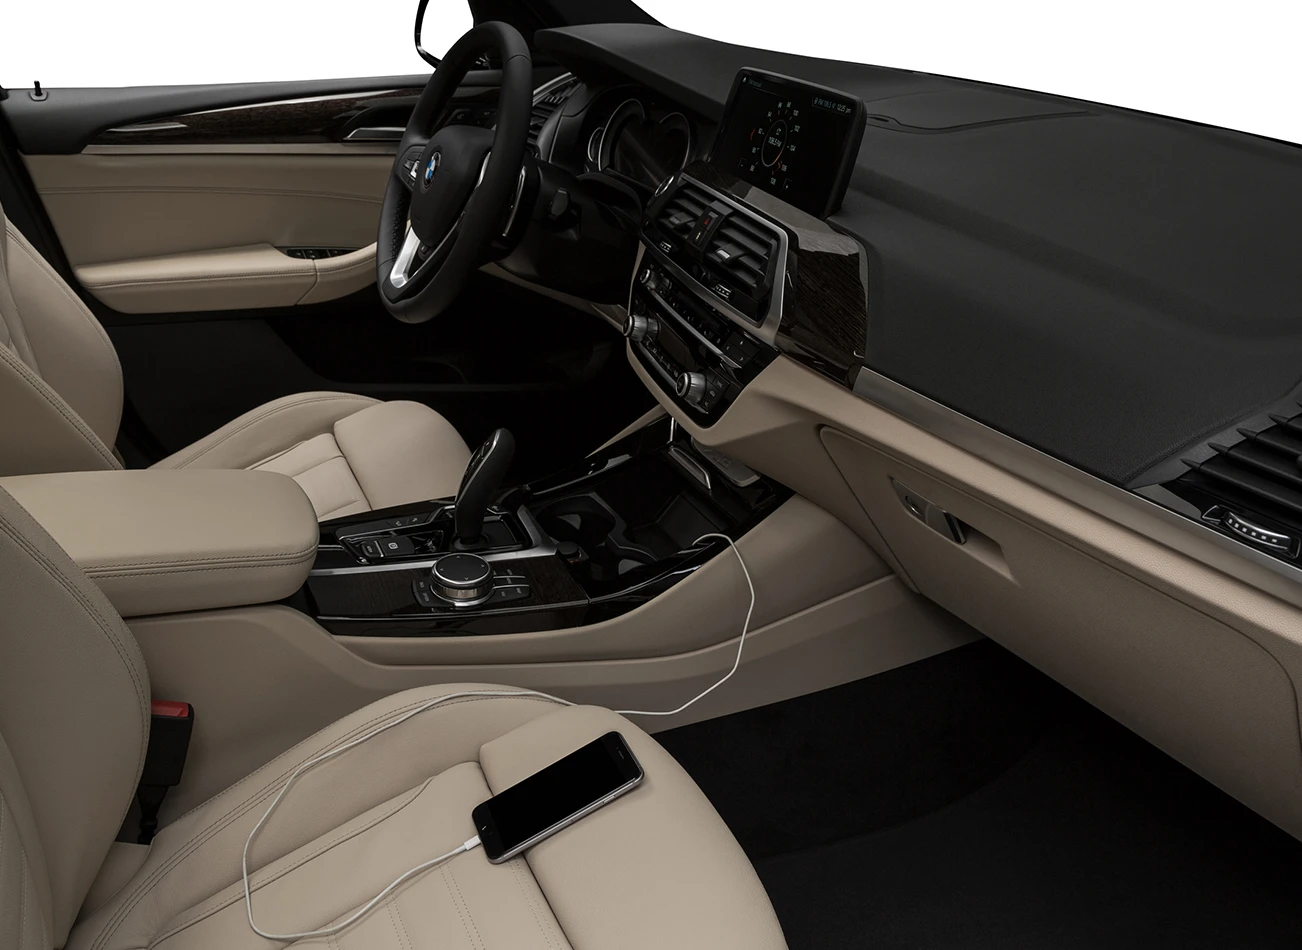 2018 BMW X3: Steering wheel and dashboard | CarMax